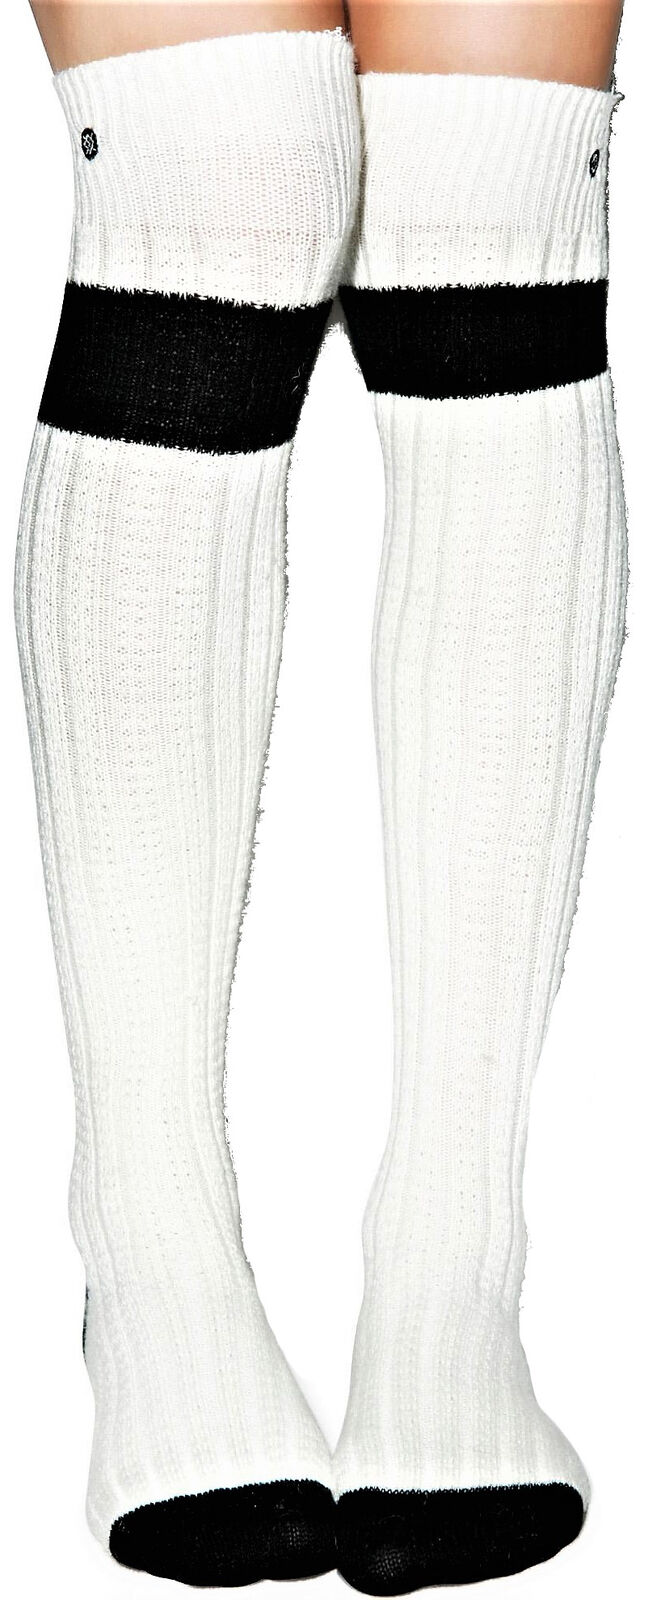 Stance Calze Boot Socks Pattern Donna 2